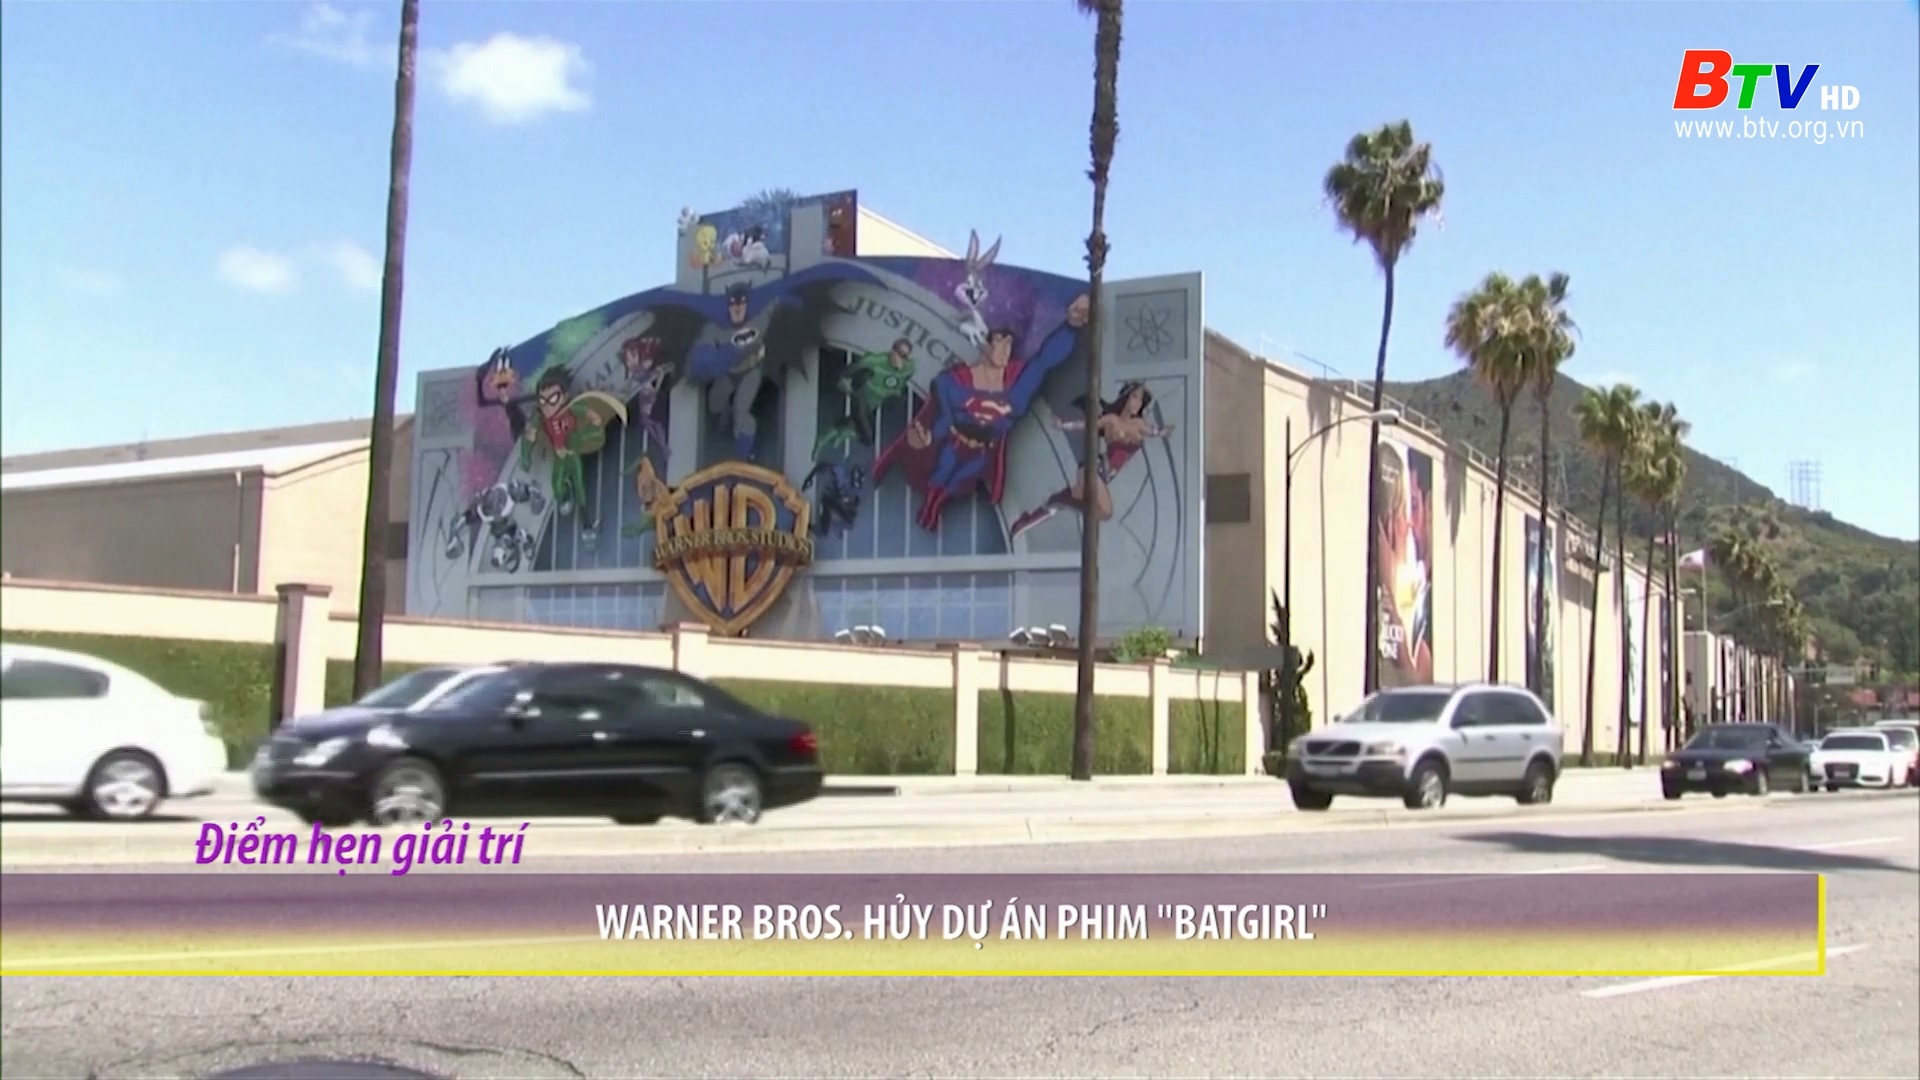 Warner Bros. hủy dự án phim “Batgirl”